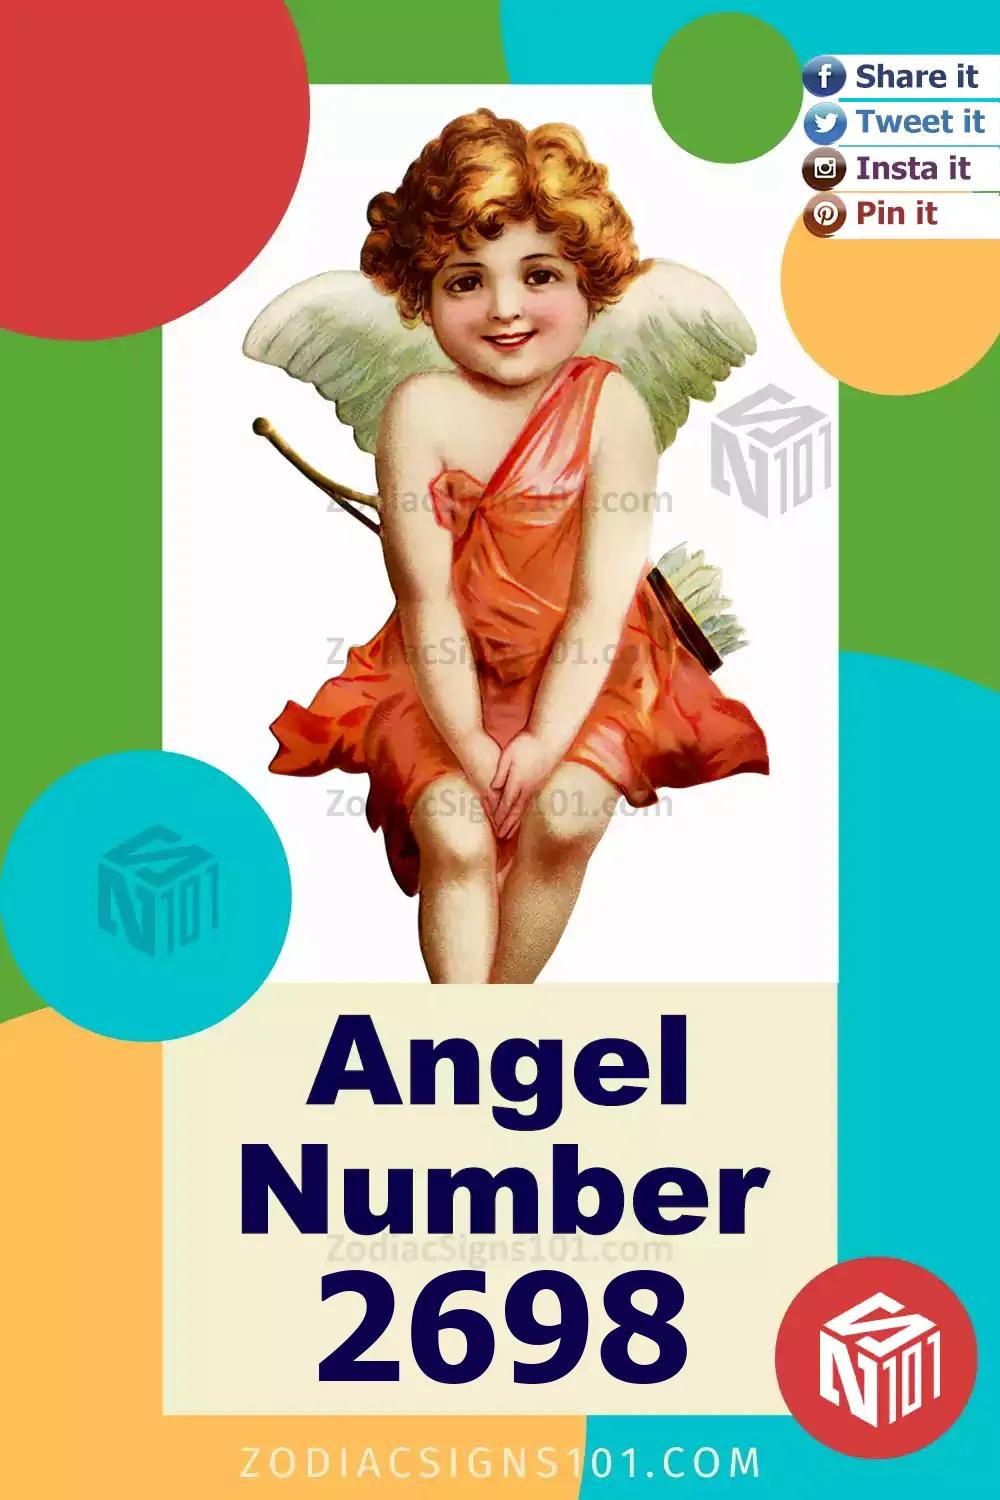 2698-Angel-Number-Meaning.jpg